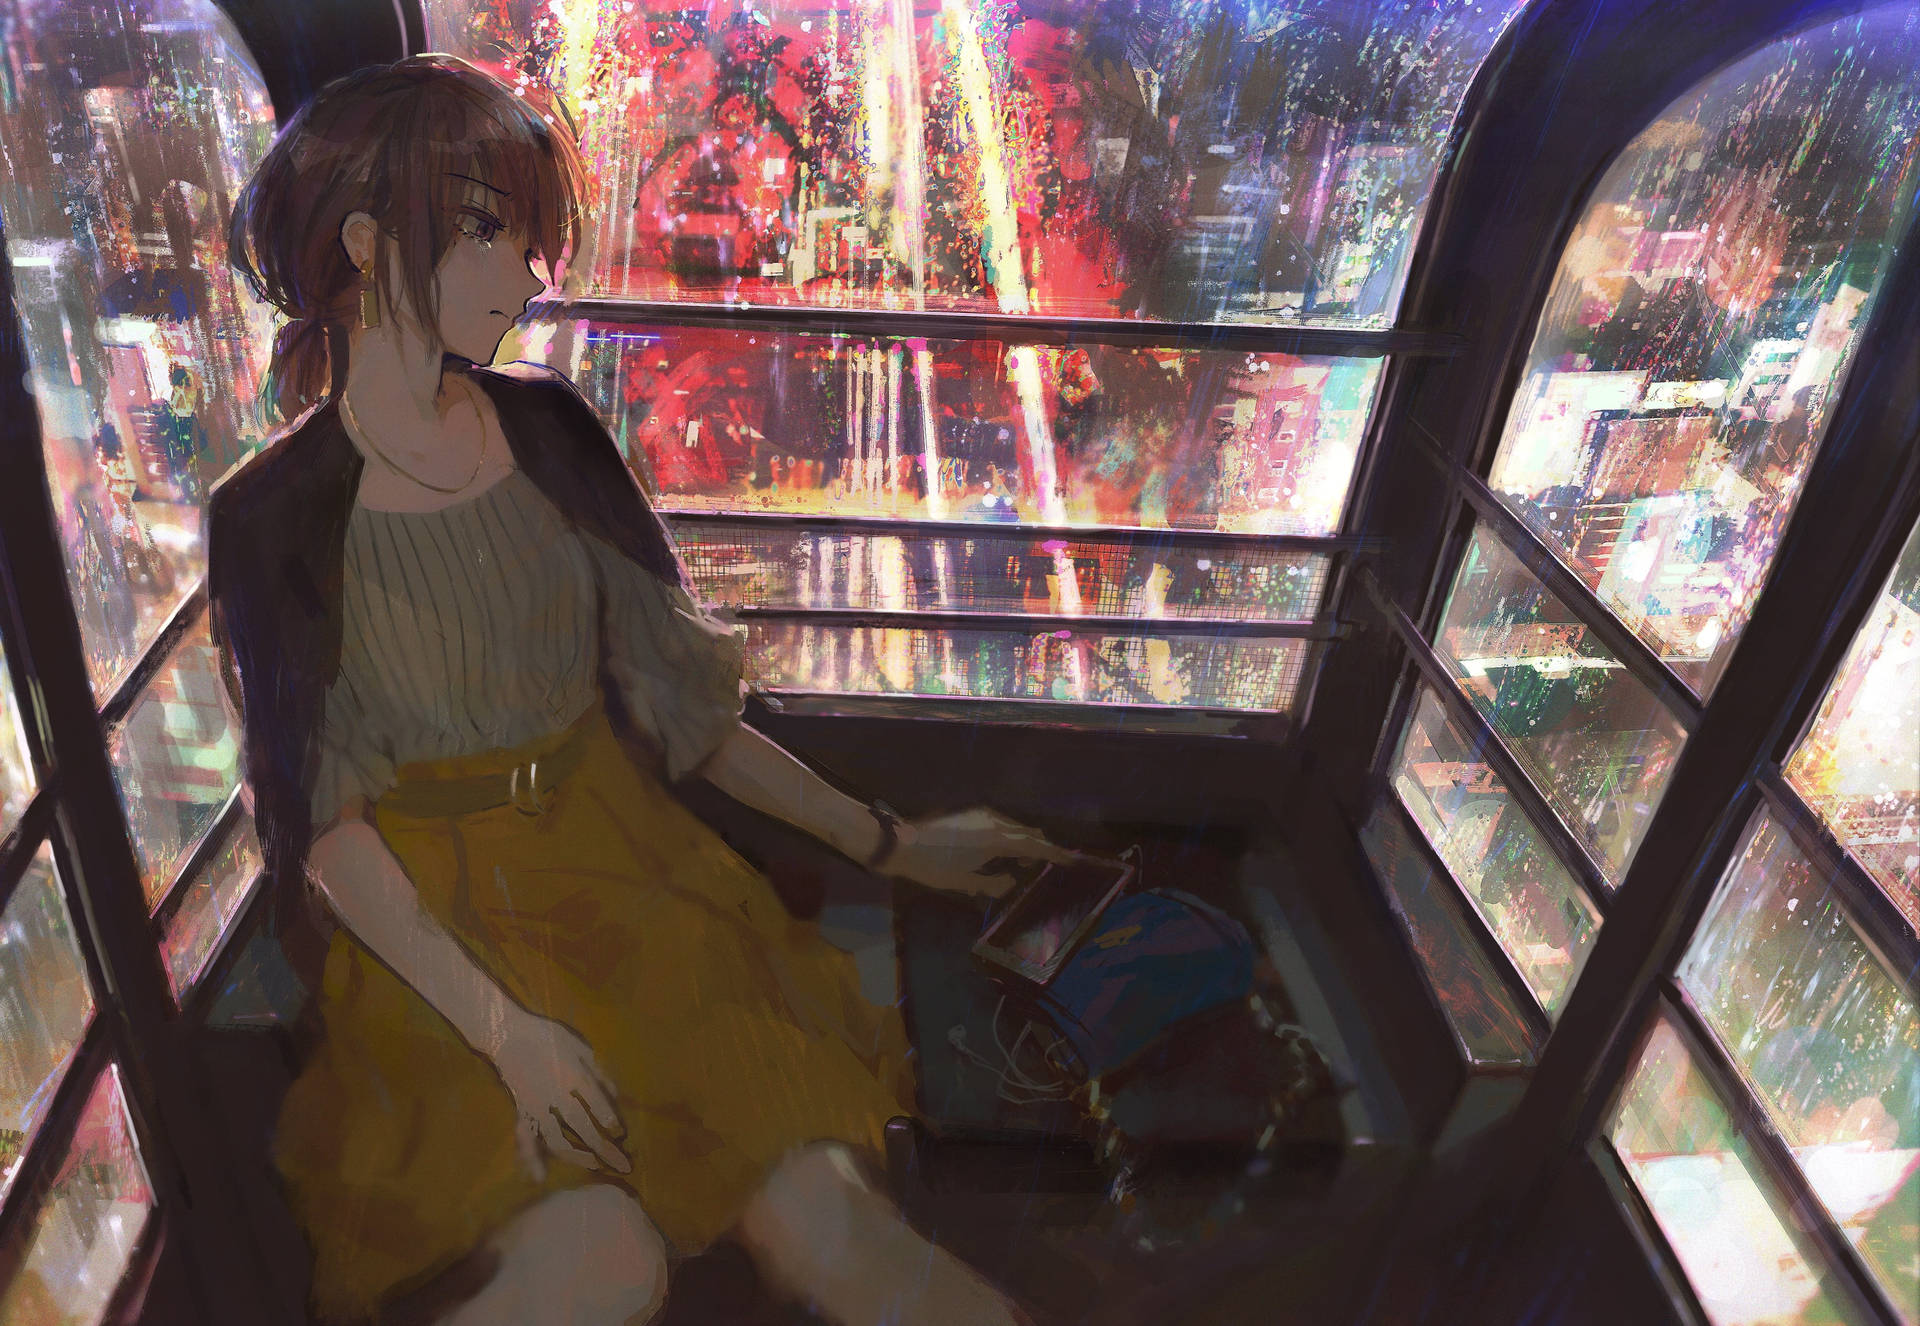 Aesthetic Sad Anime Girl In Ferris Wheel